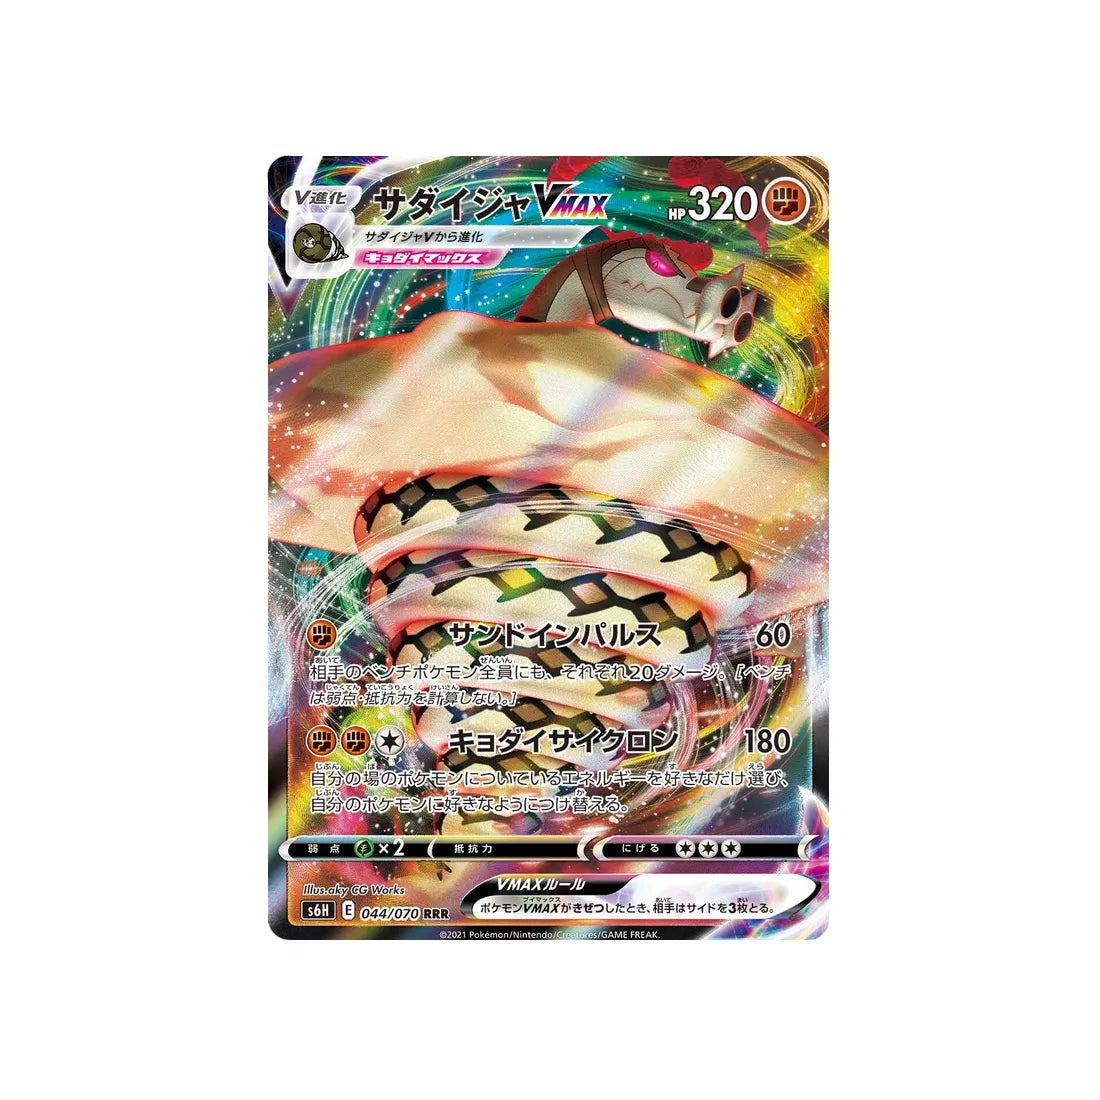 Carte Pokémon Silver Lance S6H 044/070: Sandaconda Vmax